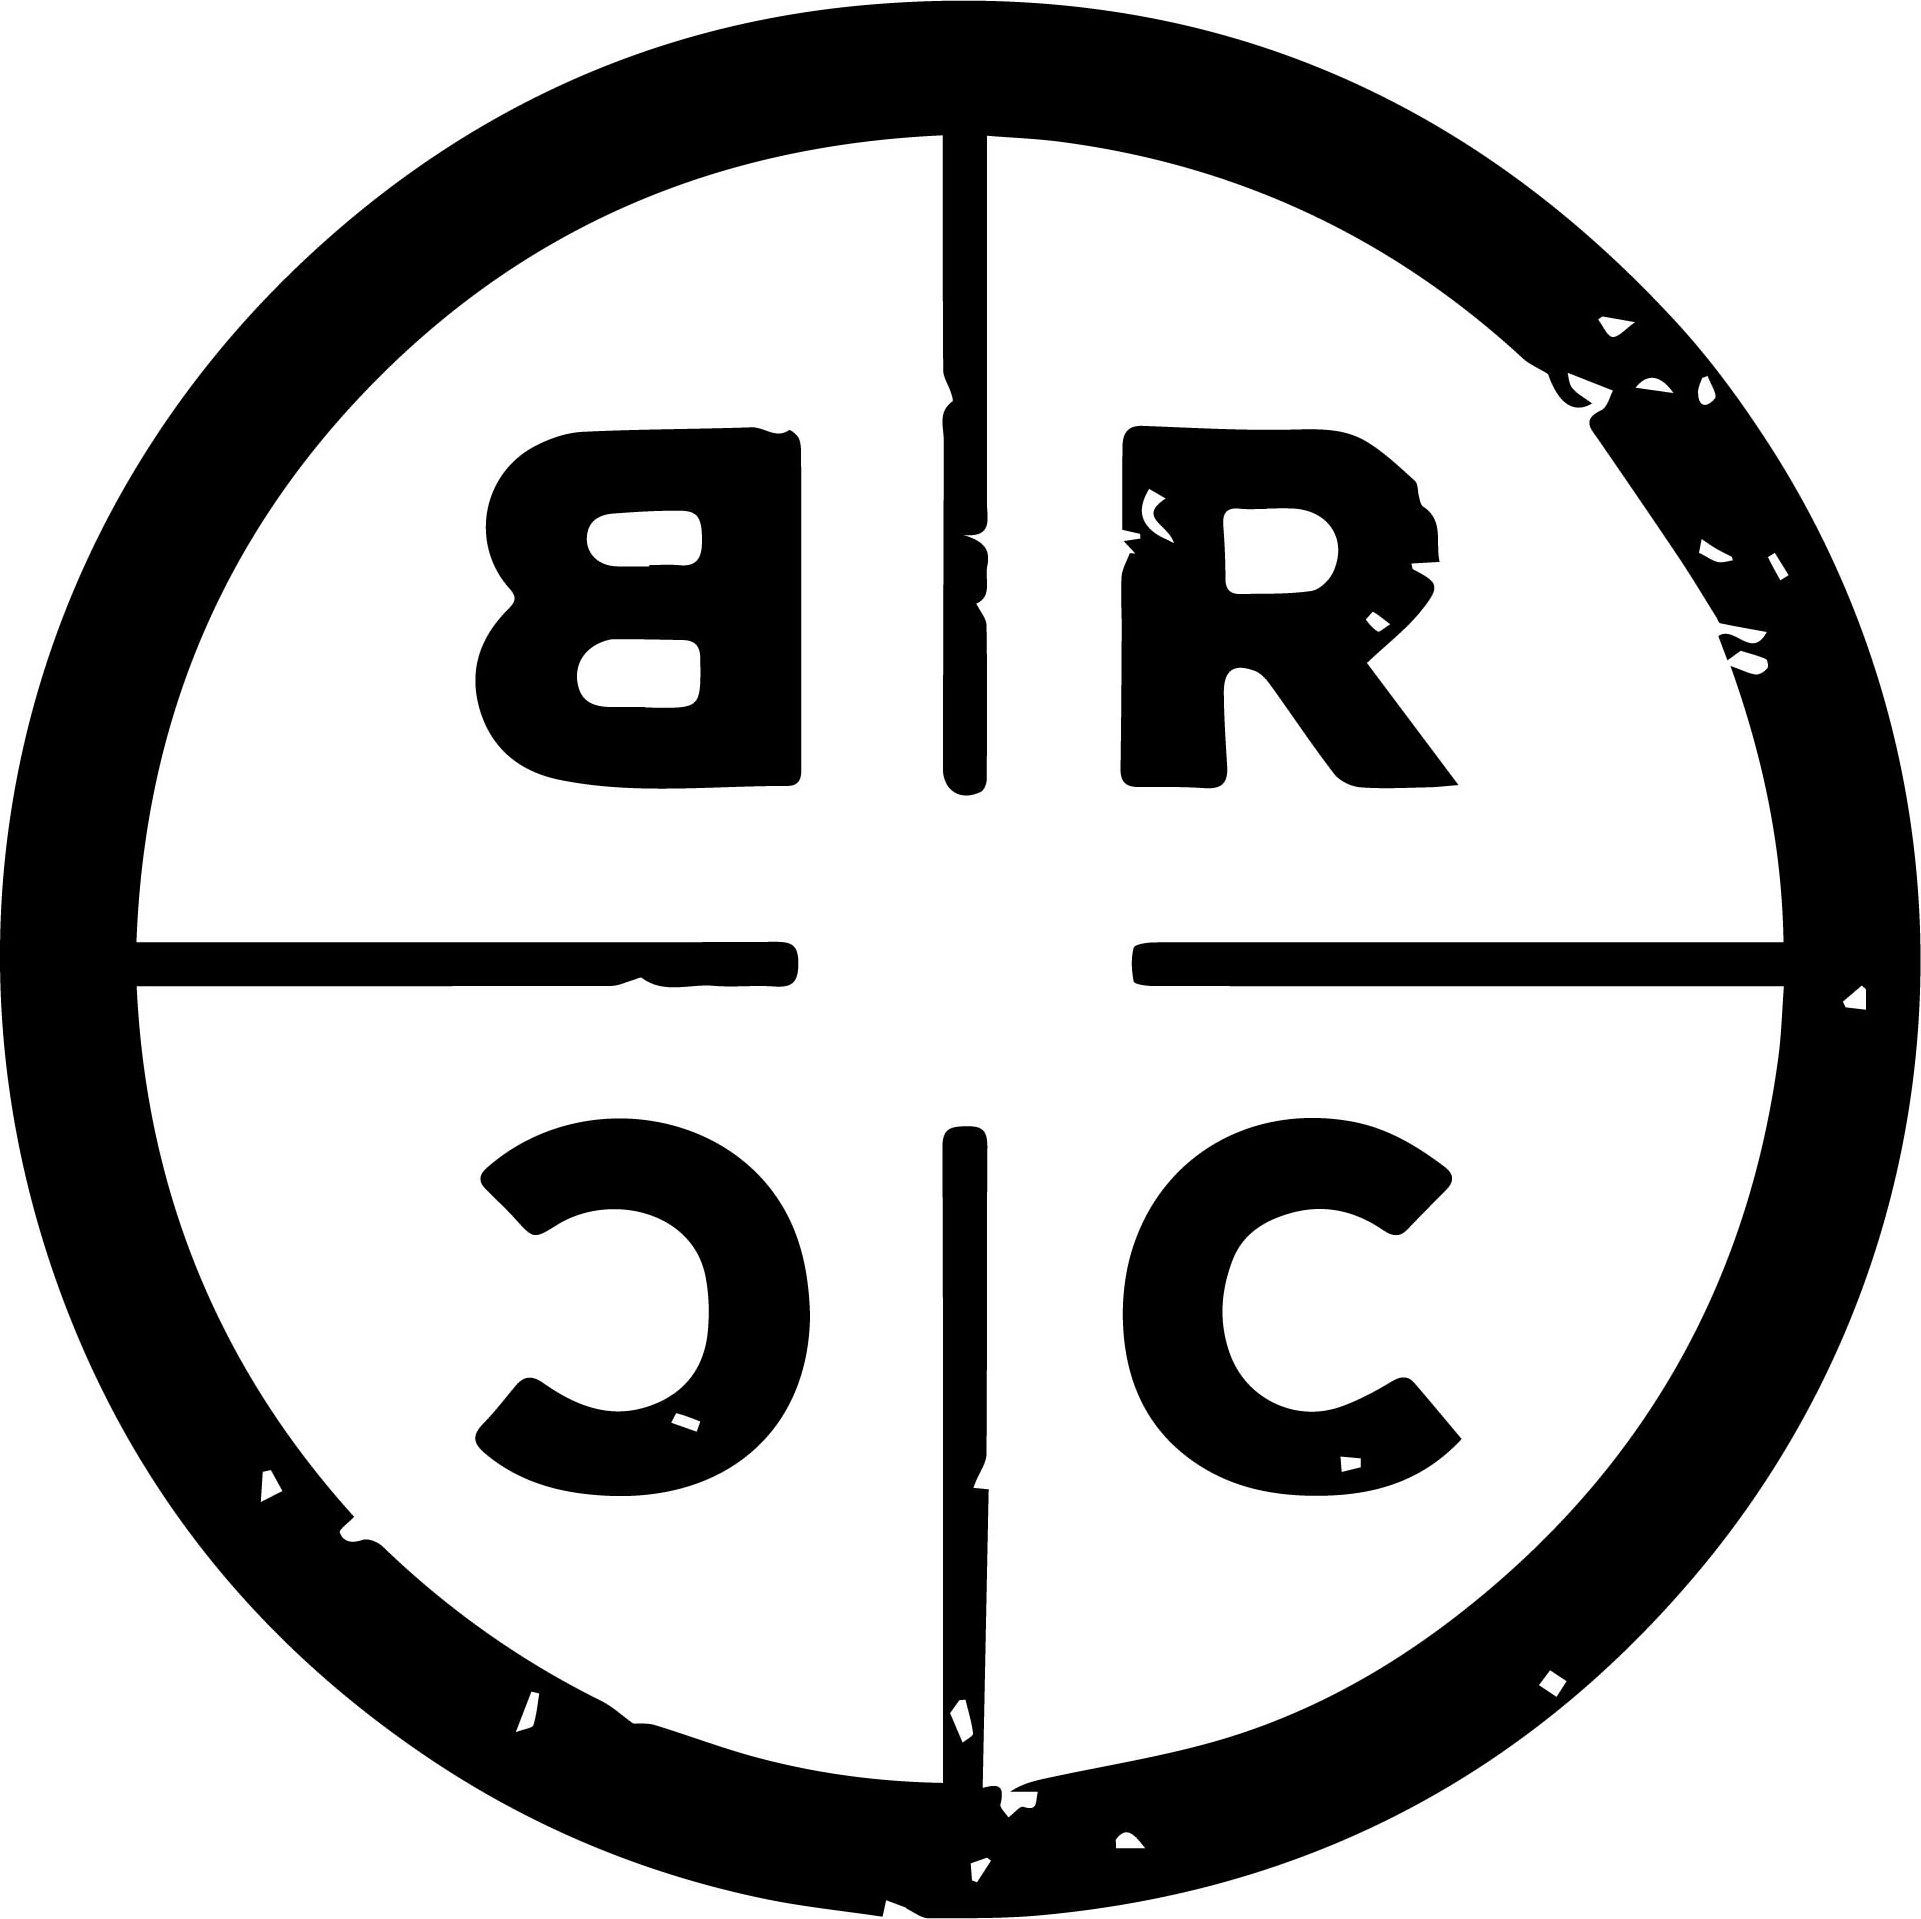 BRCC - Black Rifle Coffee Company Llc Trademark Registration